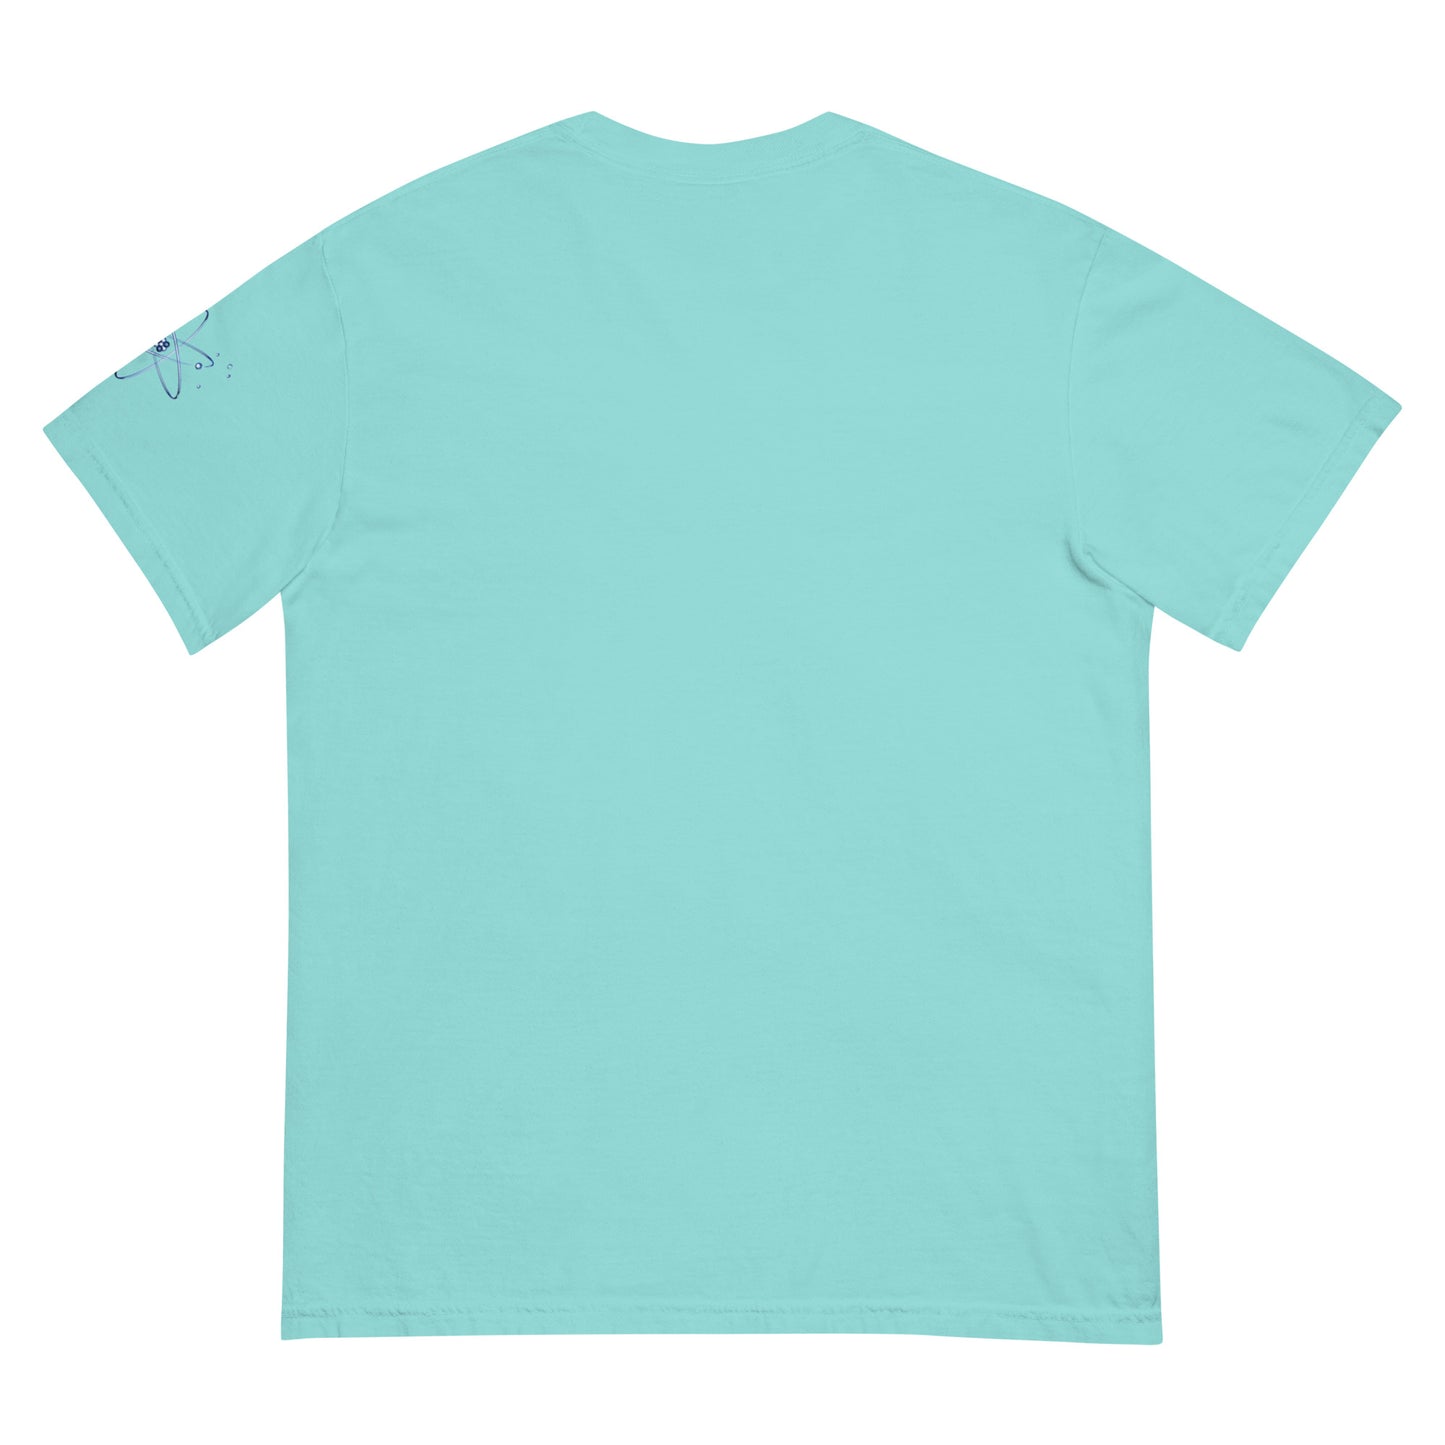 Unisex Peaceful Science garment-dyed heavyweight t-shirt